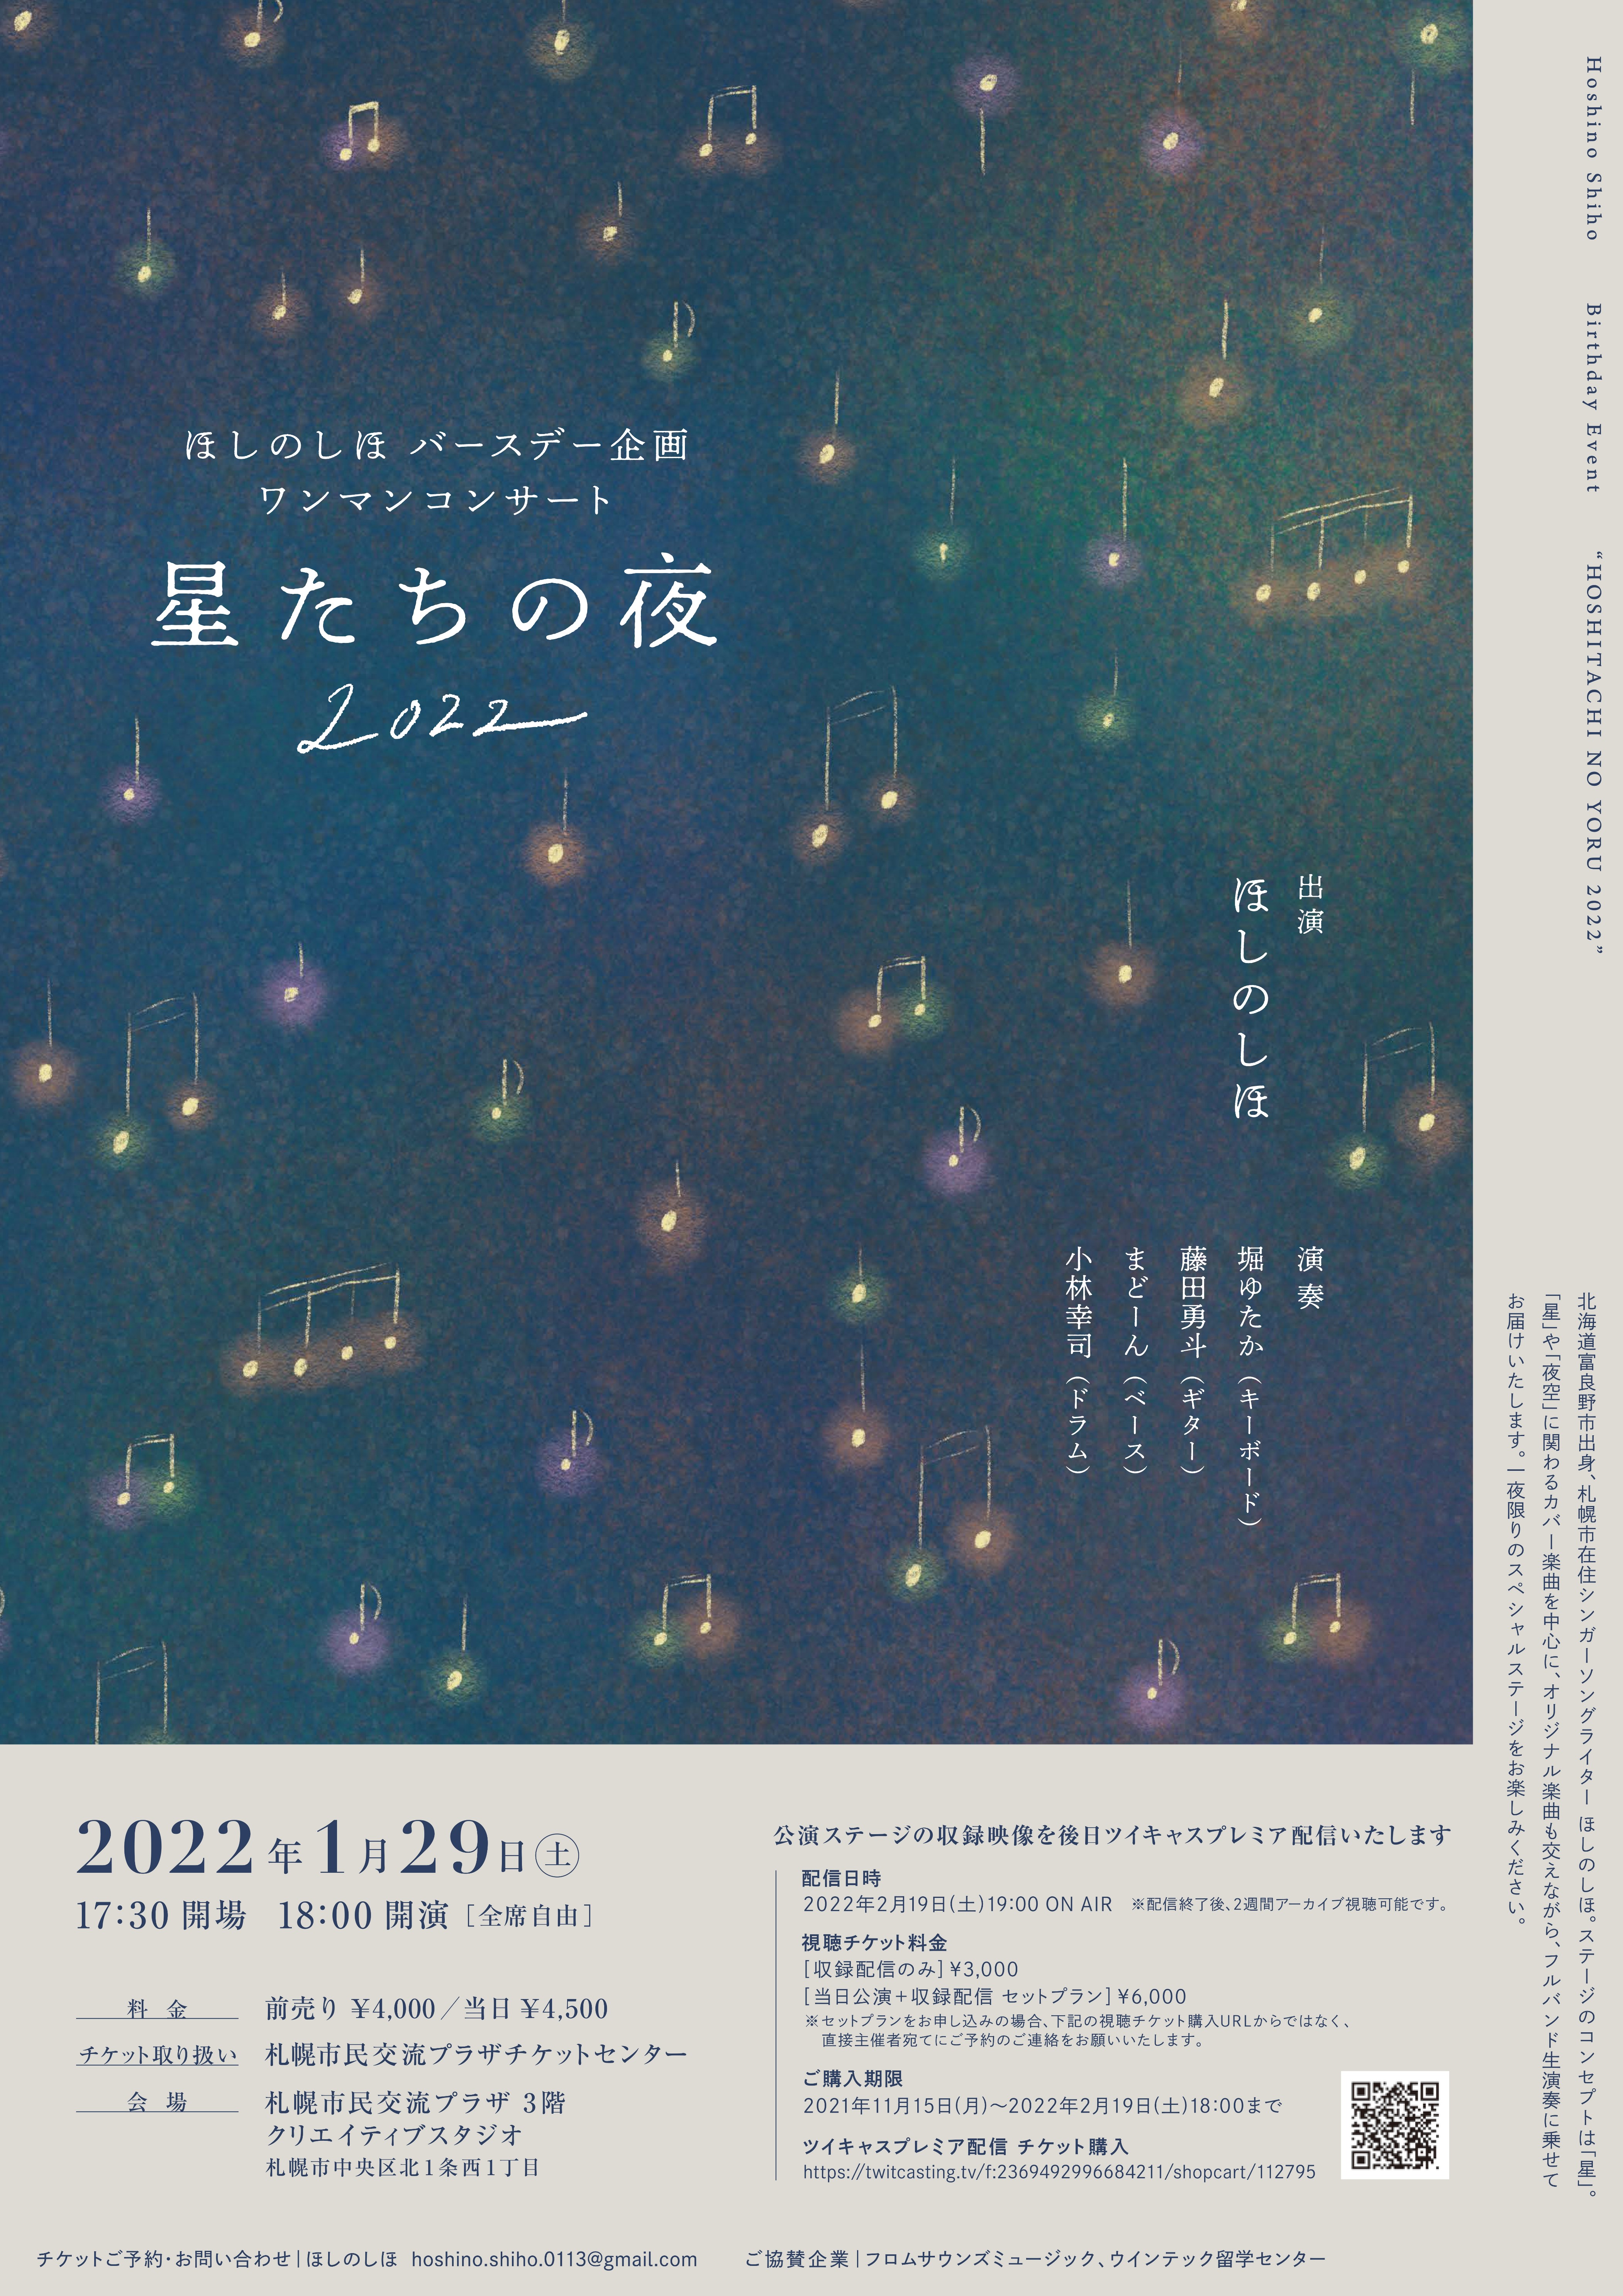 Shiho Hoshino’s Birthday Event: Starry Night 2022 Solo Concert image